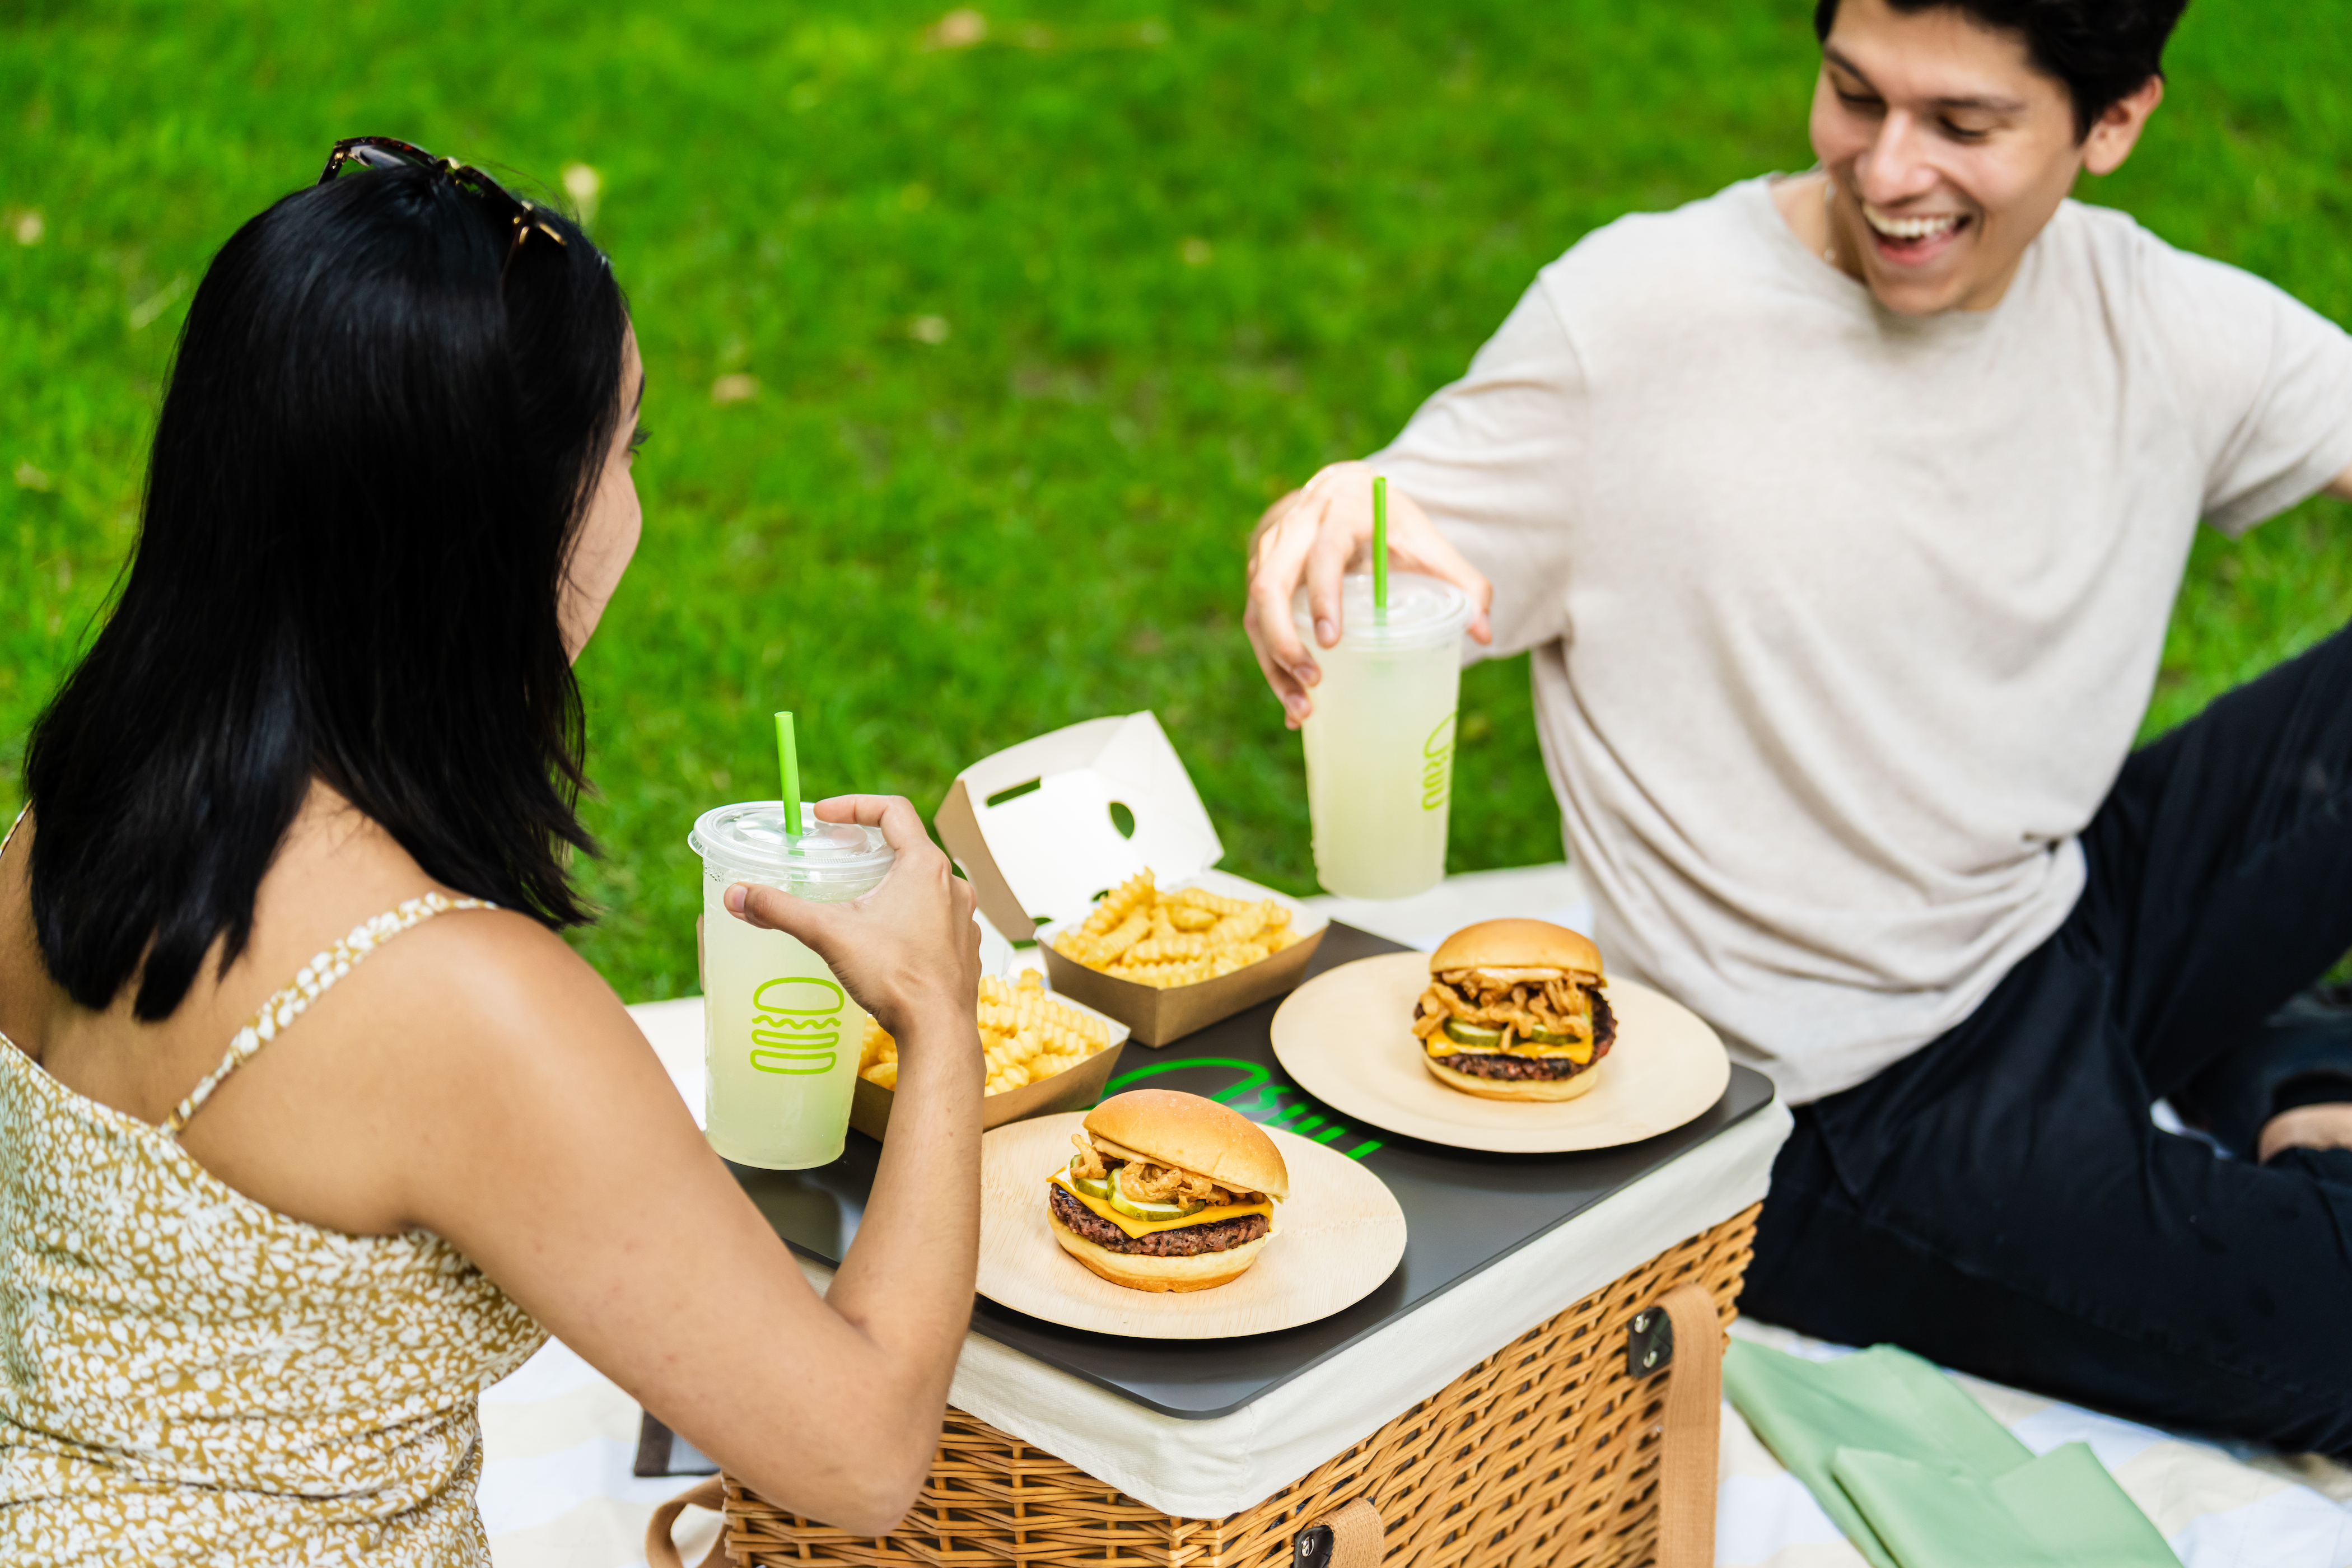 Two people enjoying a "Veg Out" picnic 